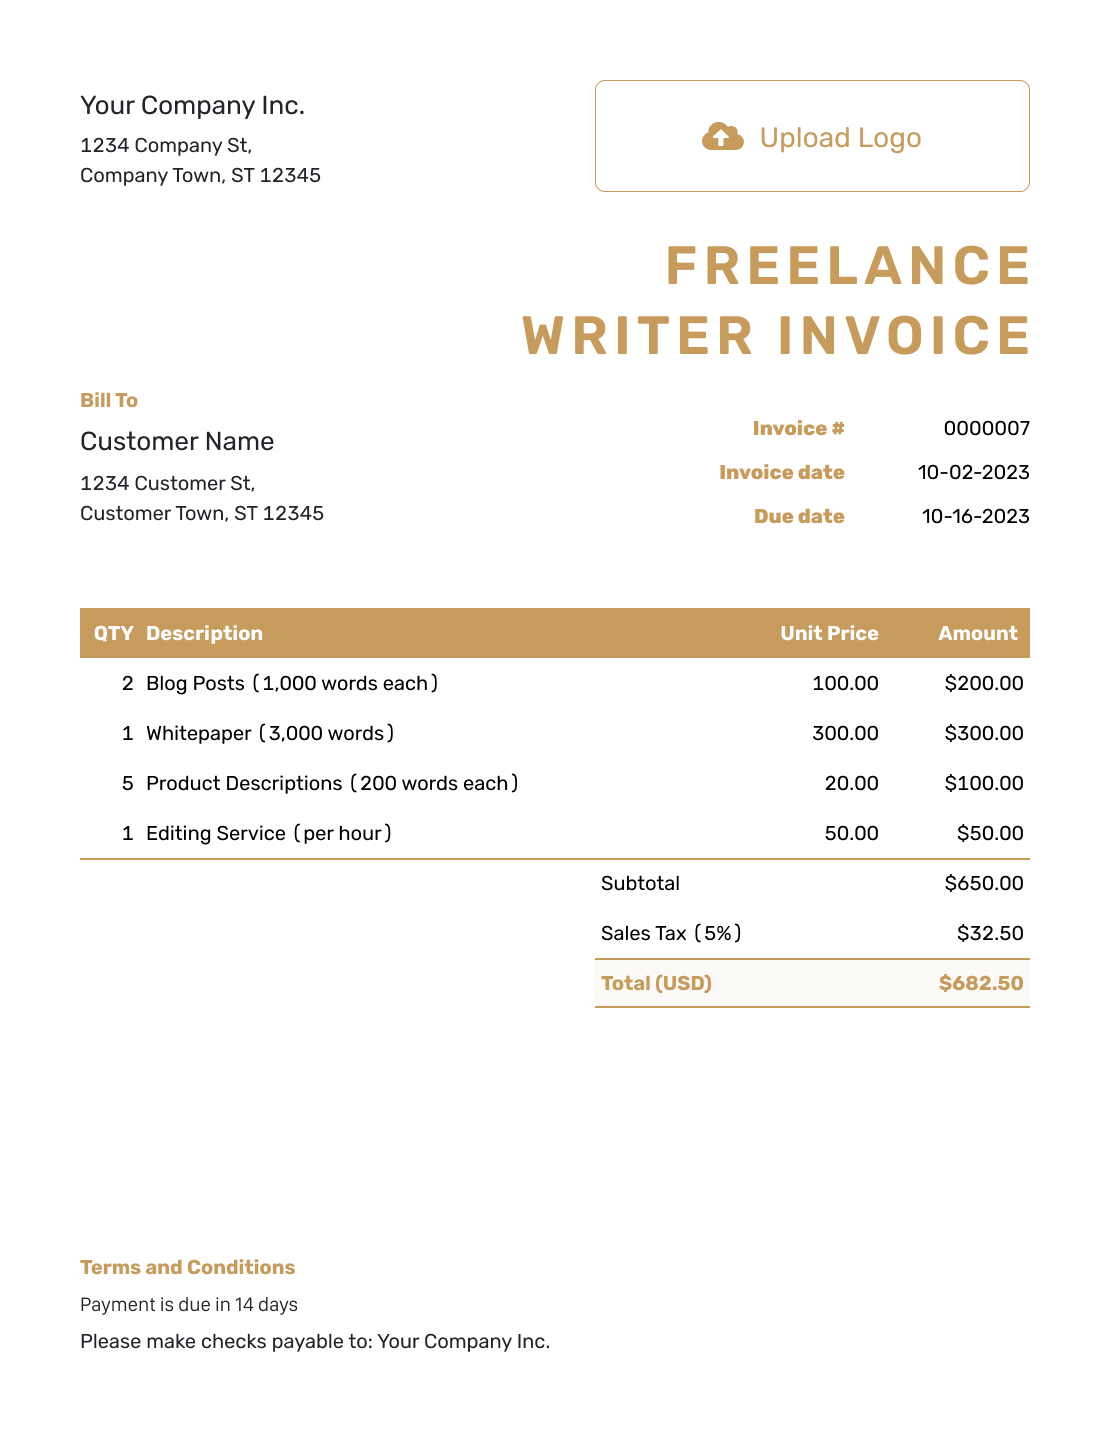 Basic Freelance Writer Invoice Template